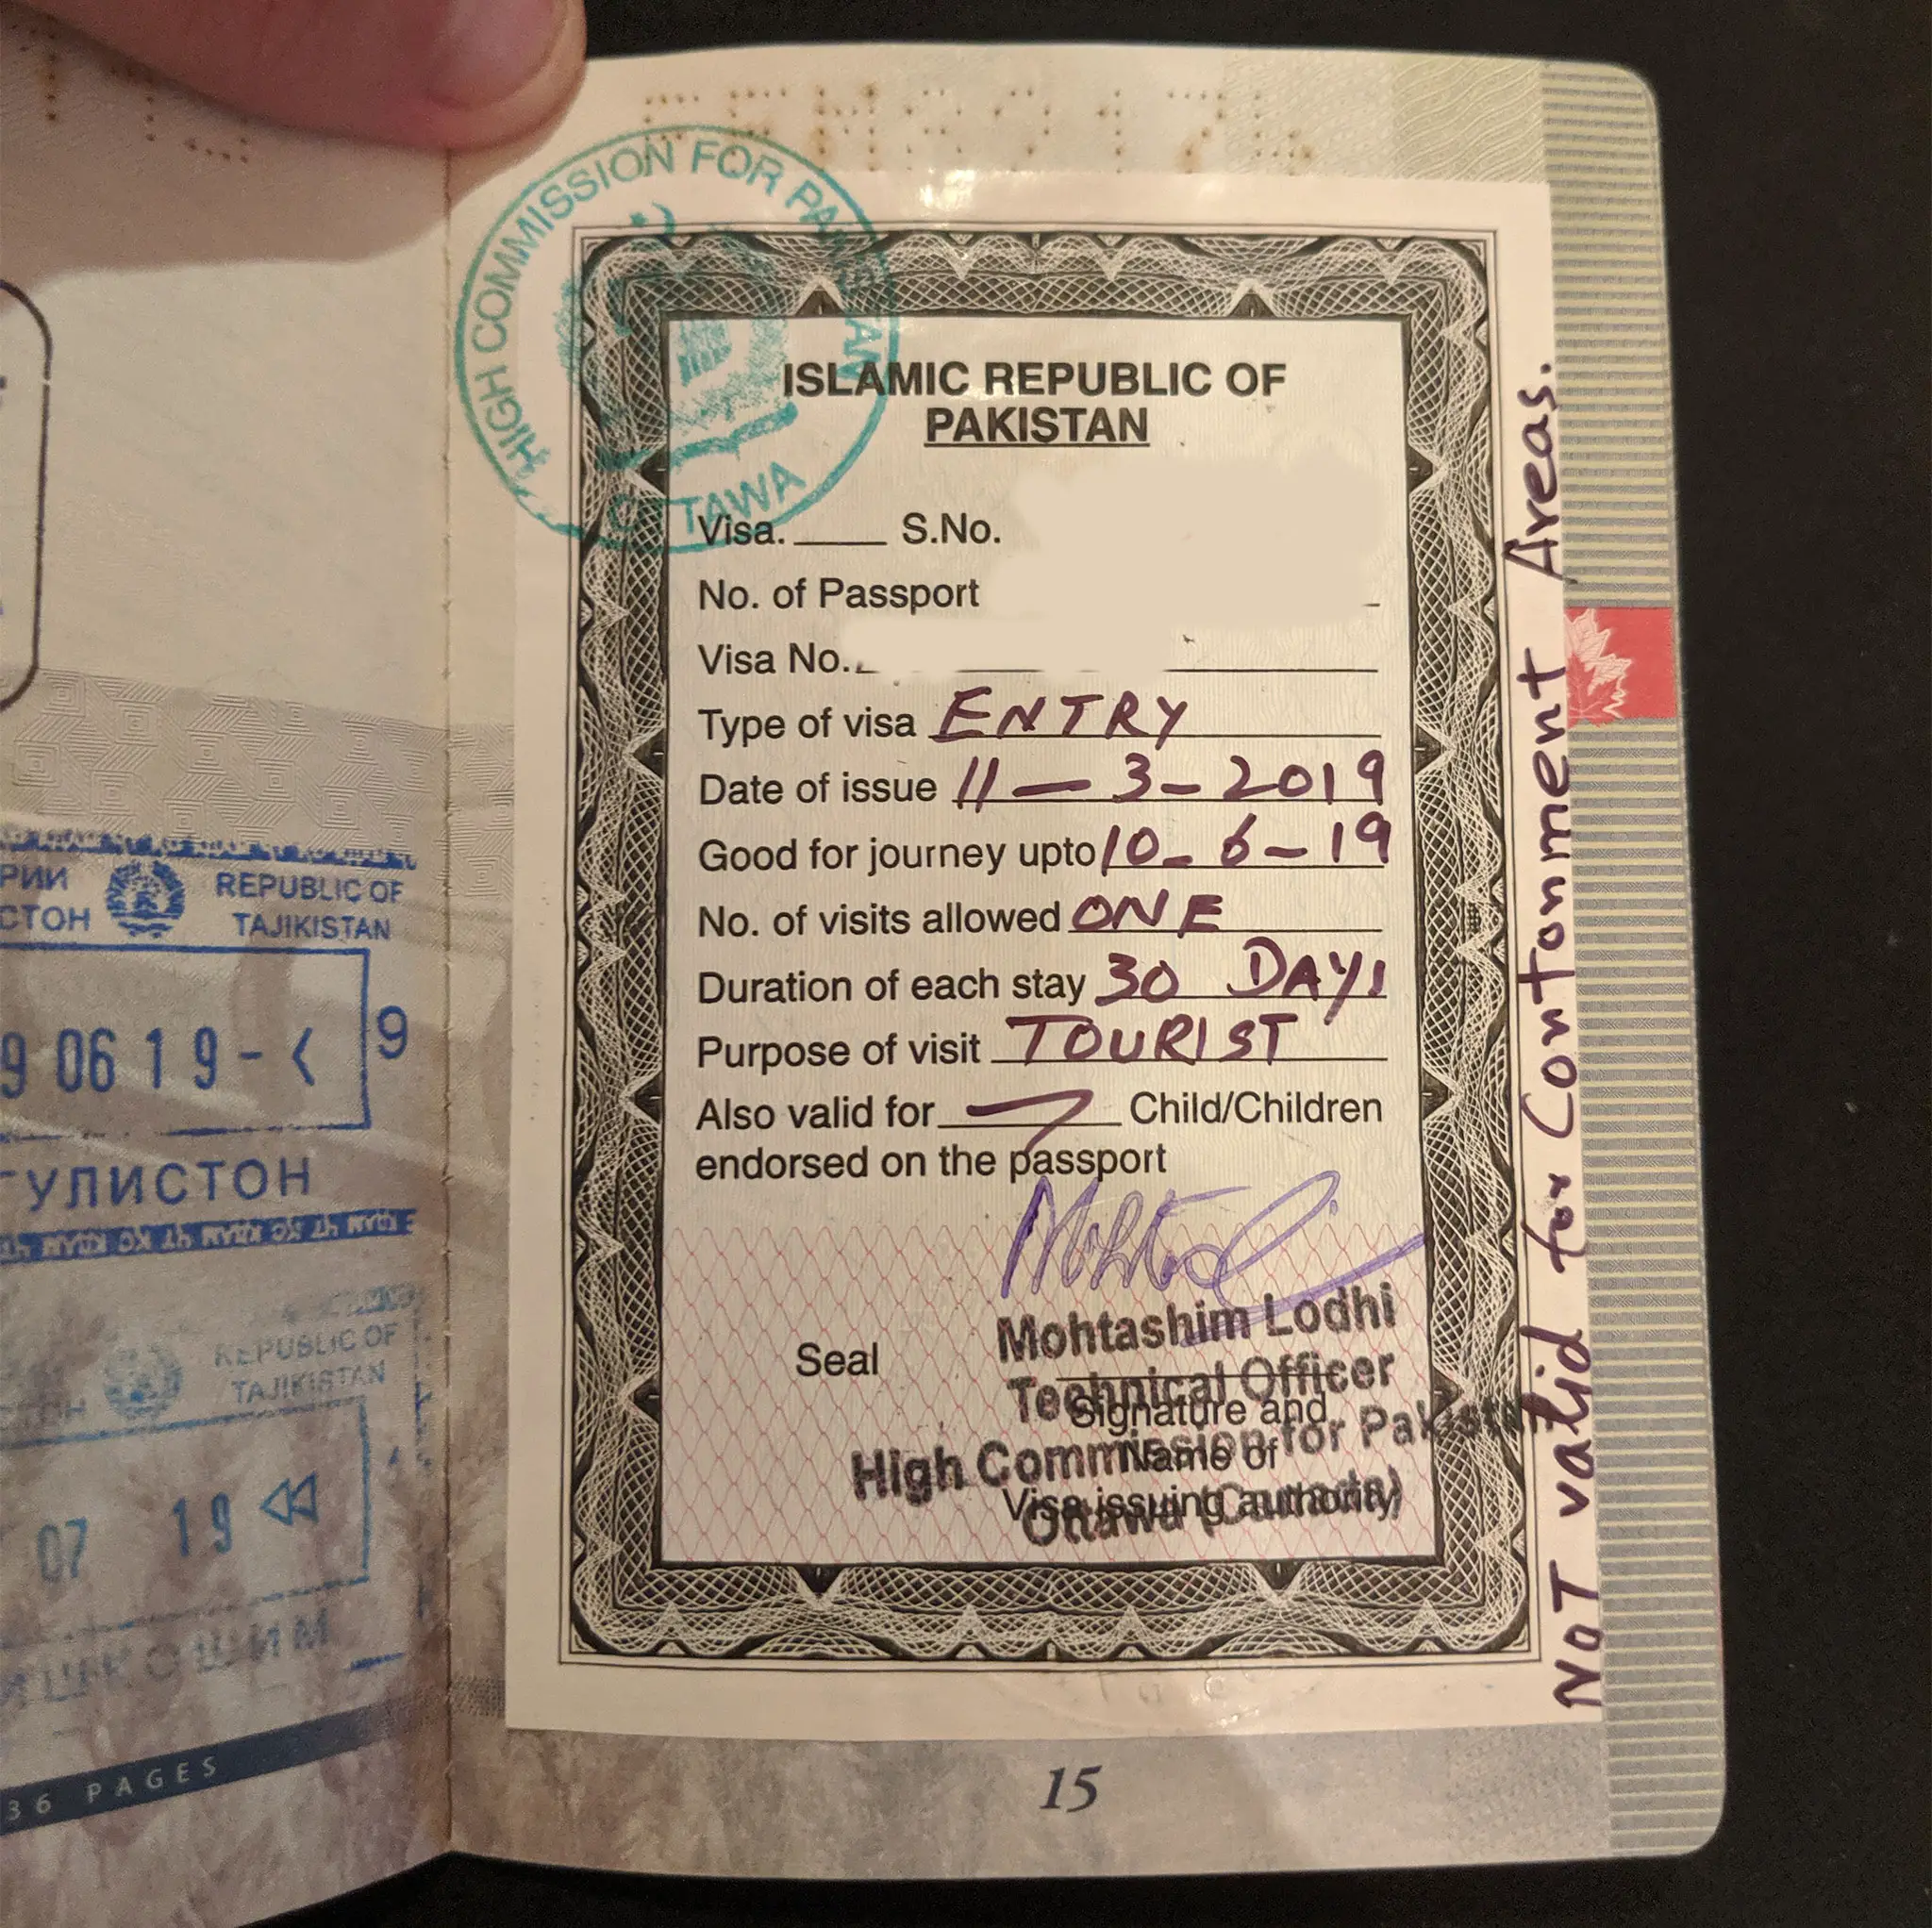 My Pakistan tourist visa